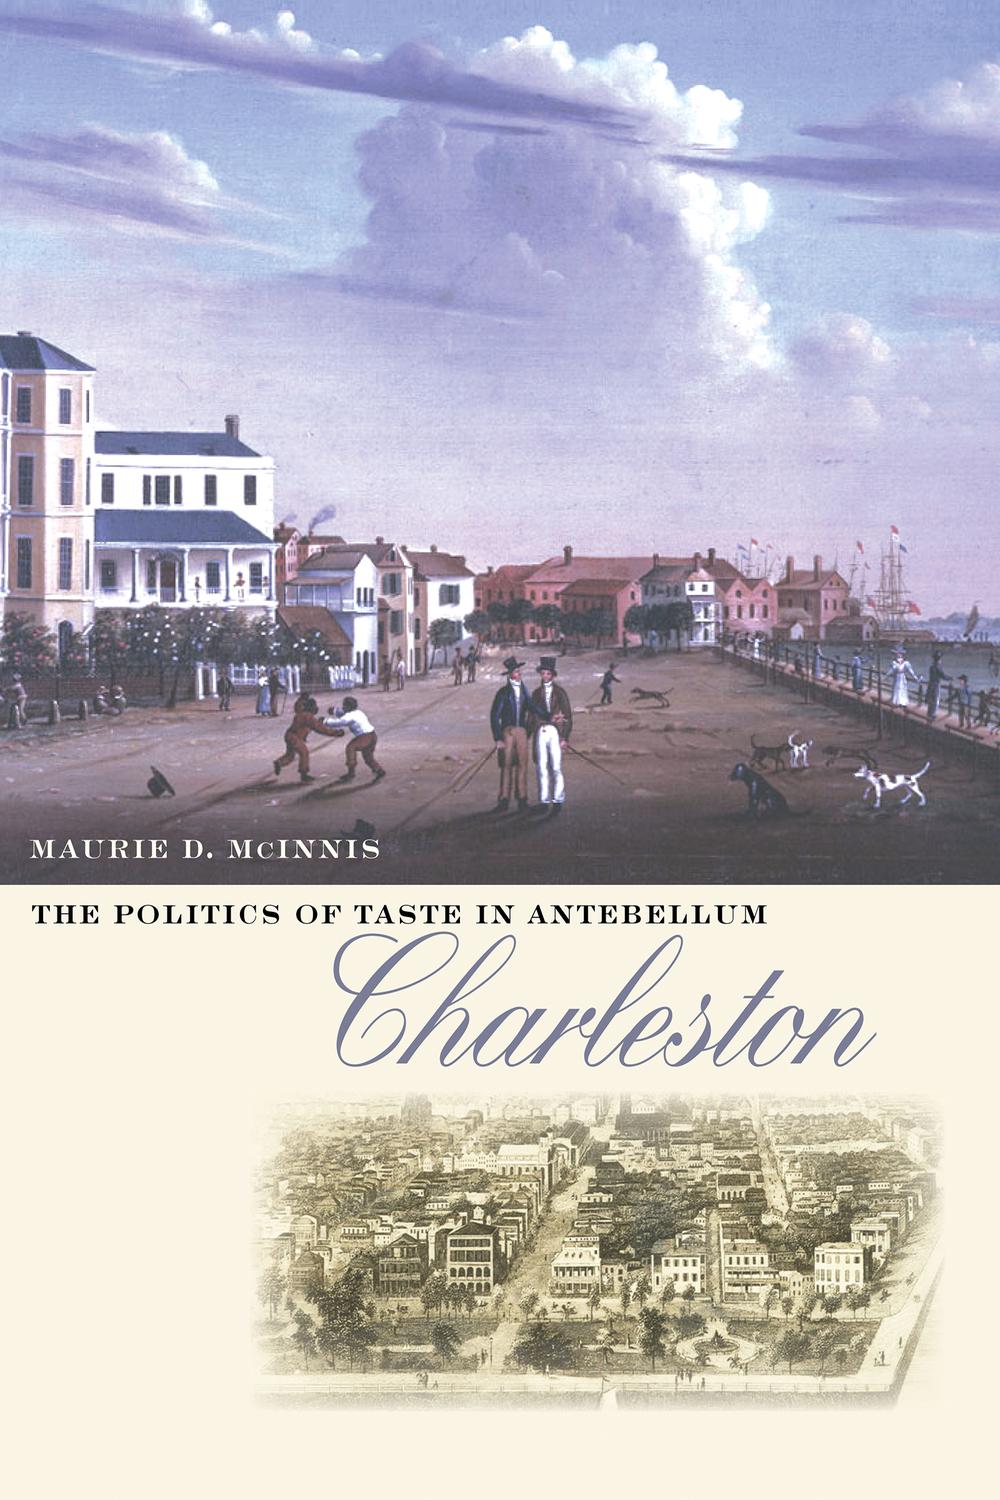 The Politics of Taste in Antebellum Charleston - Maurie D. McInnis